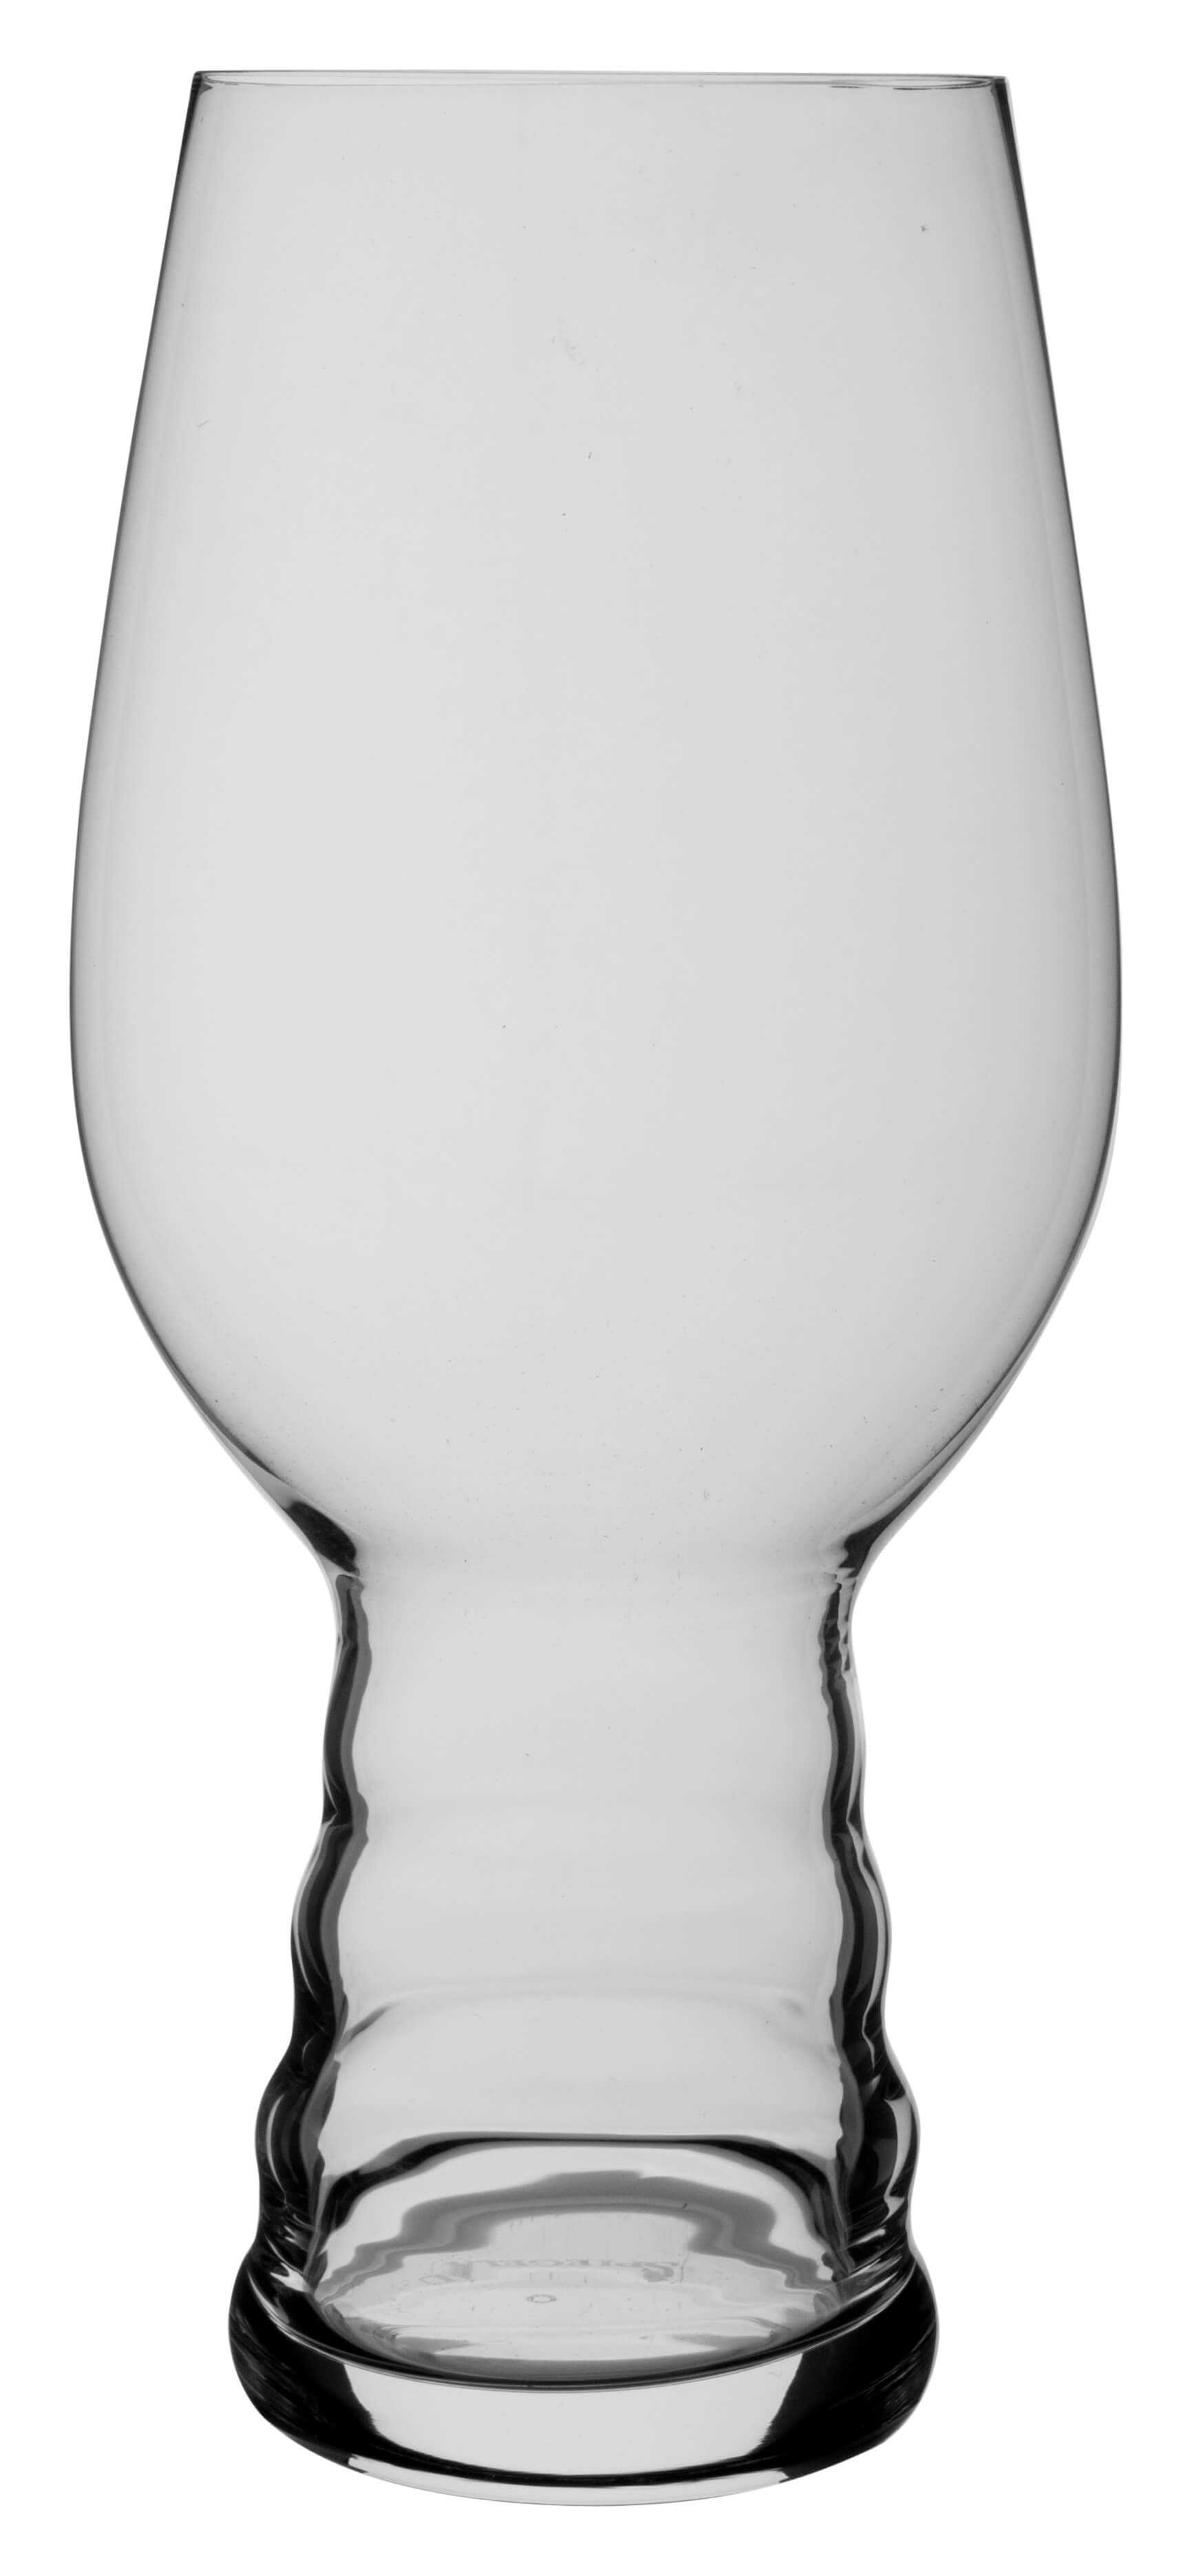 IPA Glass, Craft Beer Glasses, Spiegelau - 540ml